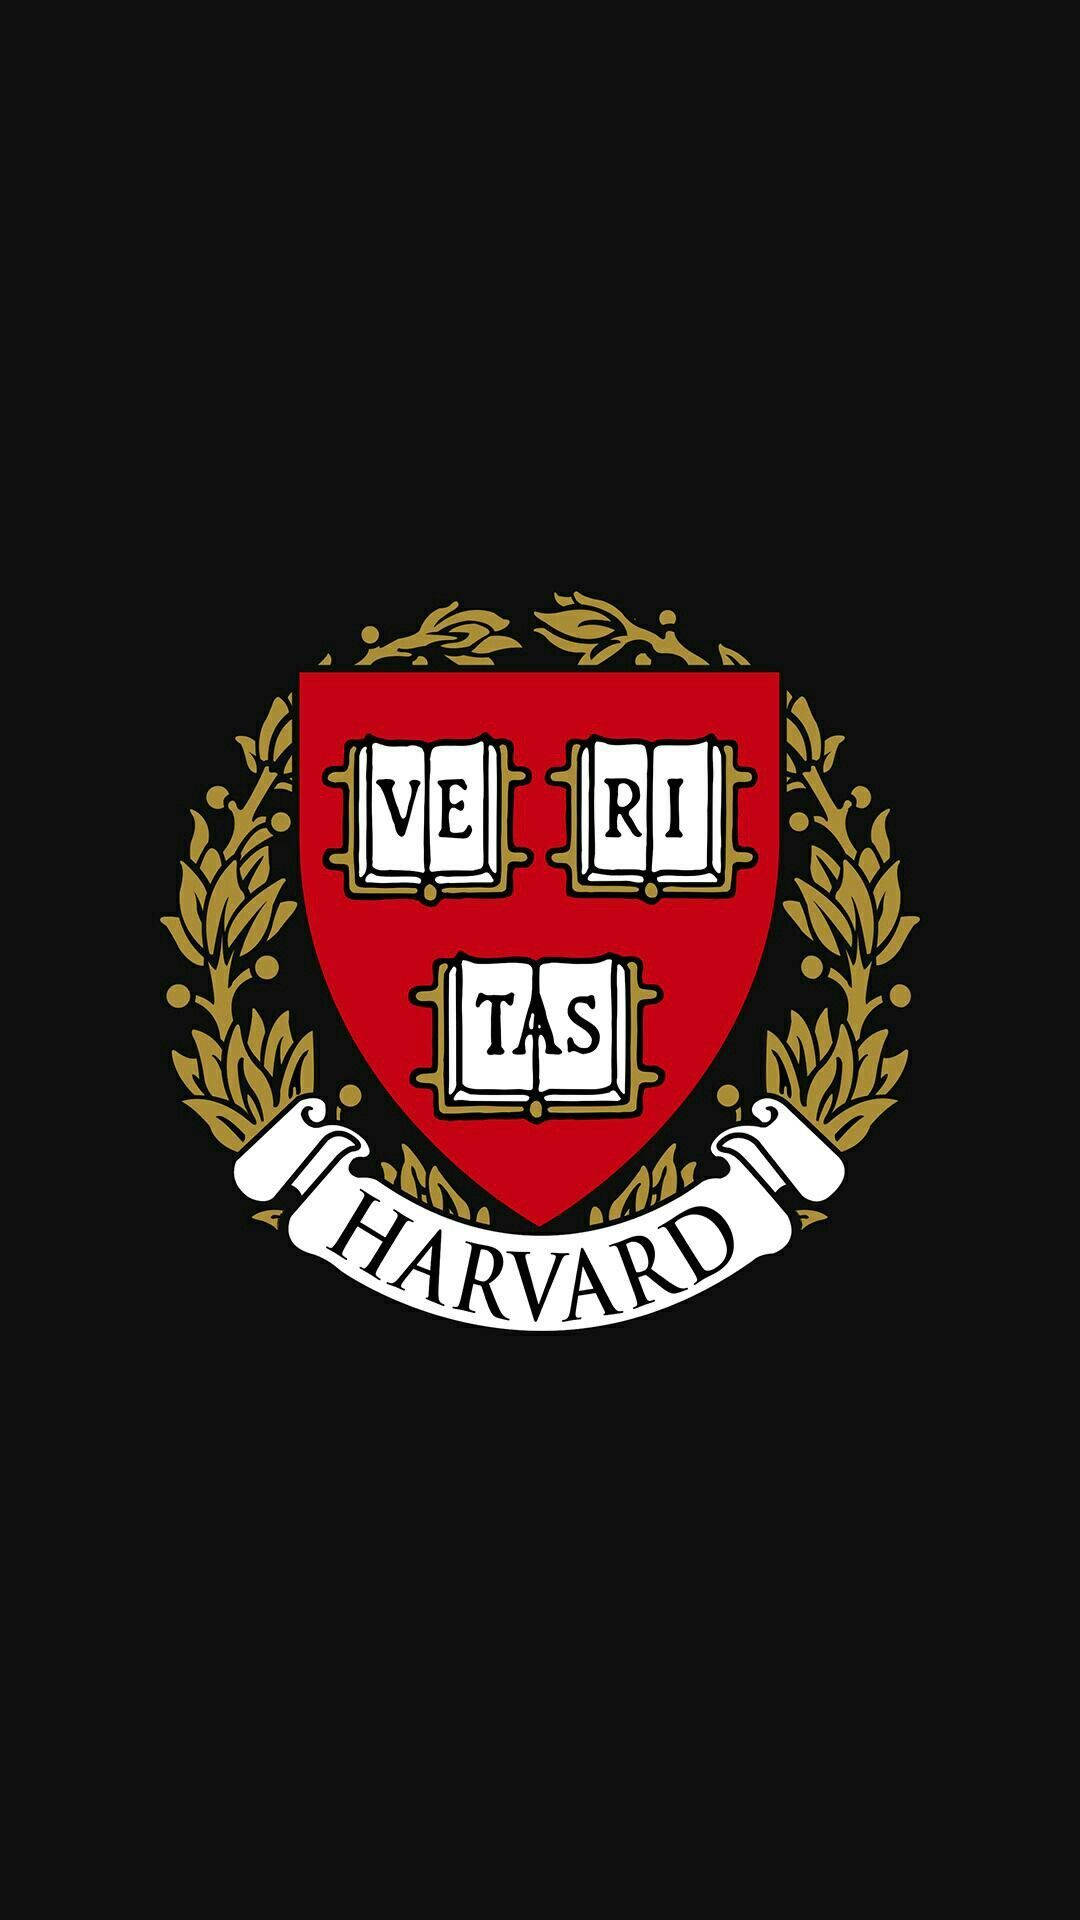 Harvarduniversitätslogo Auf Schwarz Wallpaper